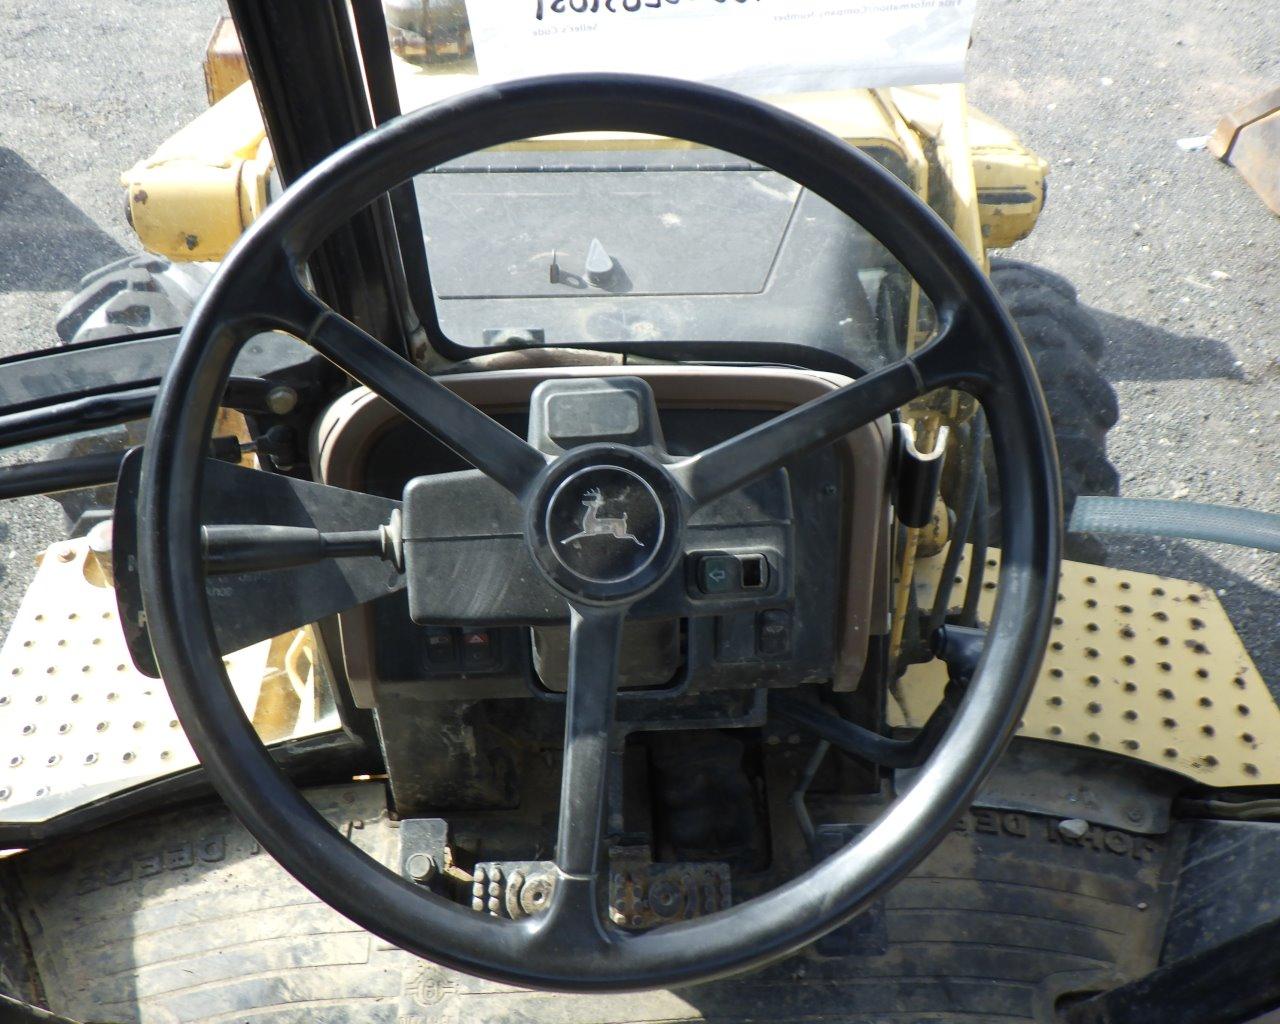 JOHN DEERE 310SE Turbo Wheel Loader Backhoe   EROPS   4x4 s/n:TO310SE857031